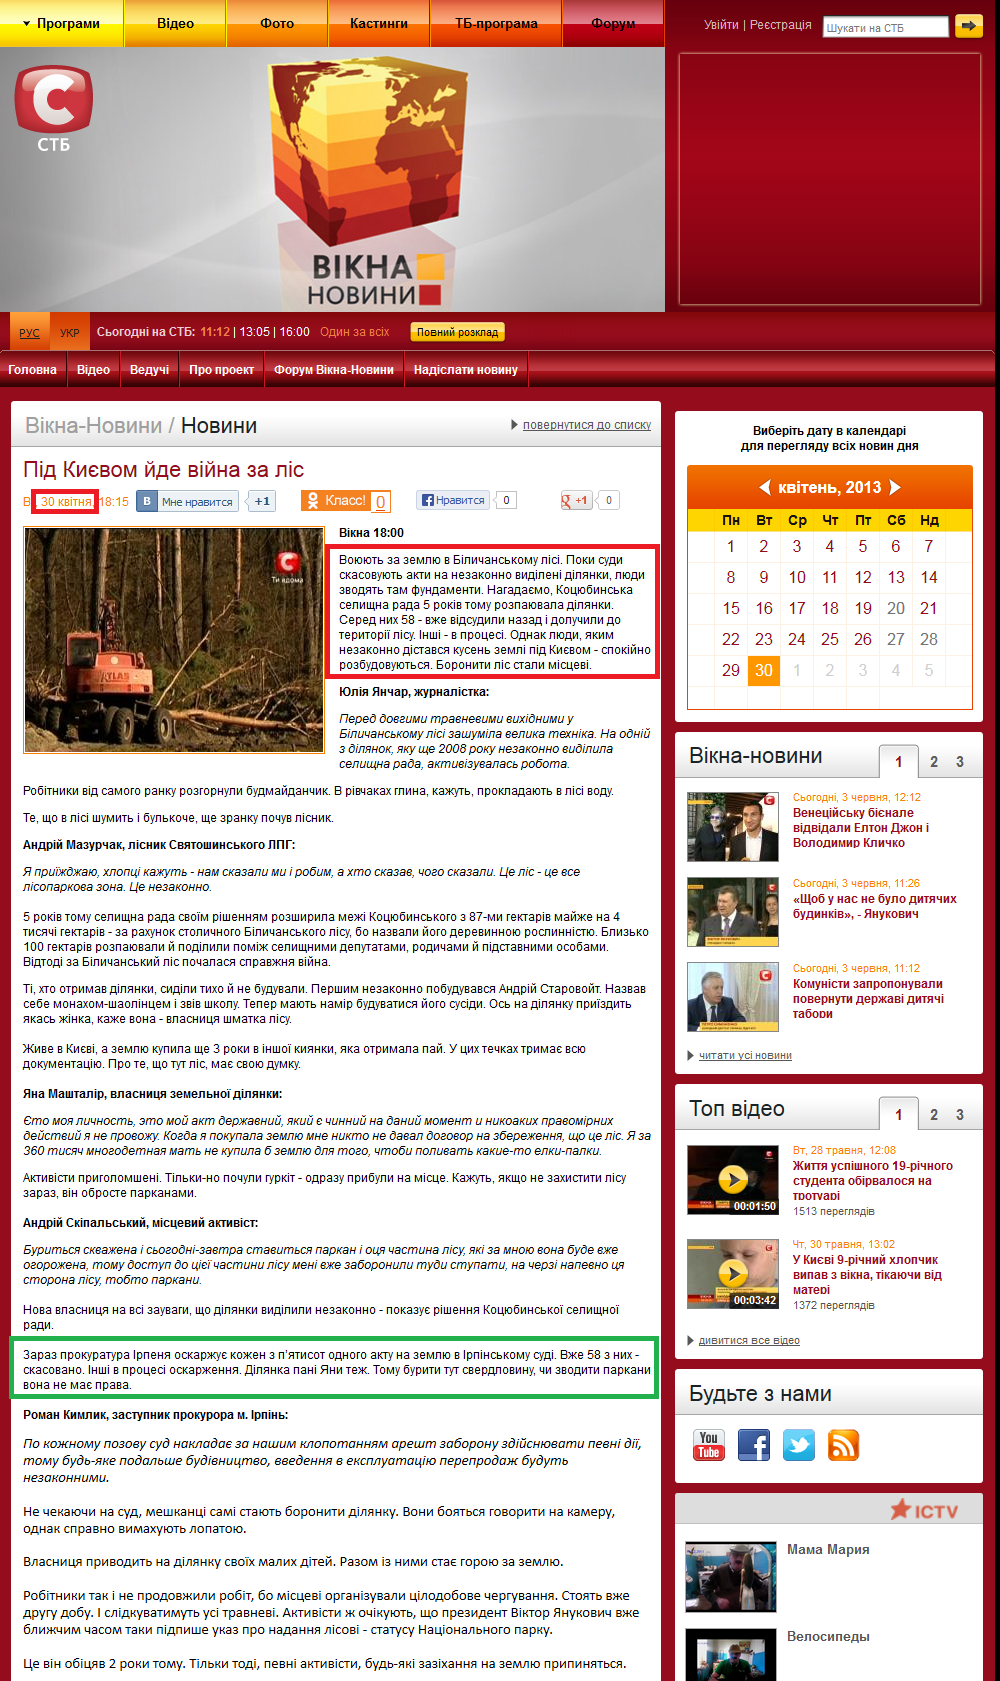 http://vikna.stb.ua/ua/news/2013/4/30/129601/